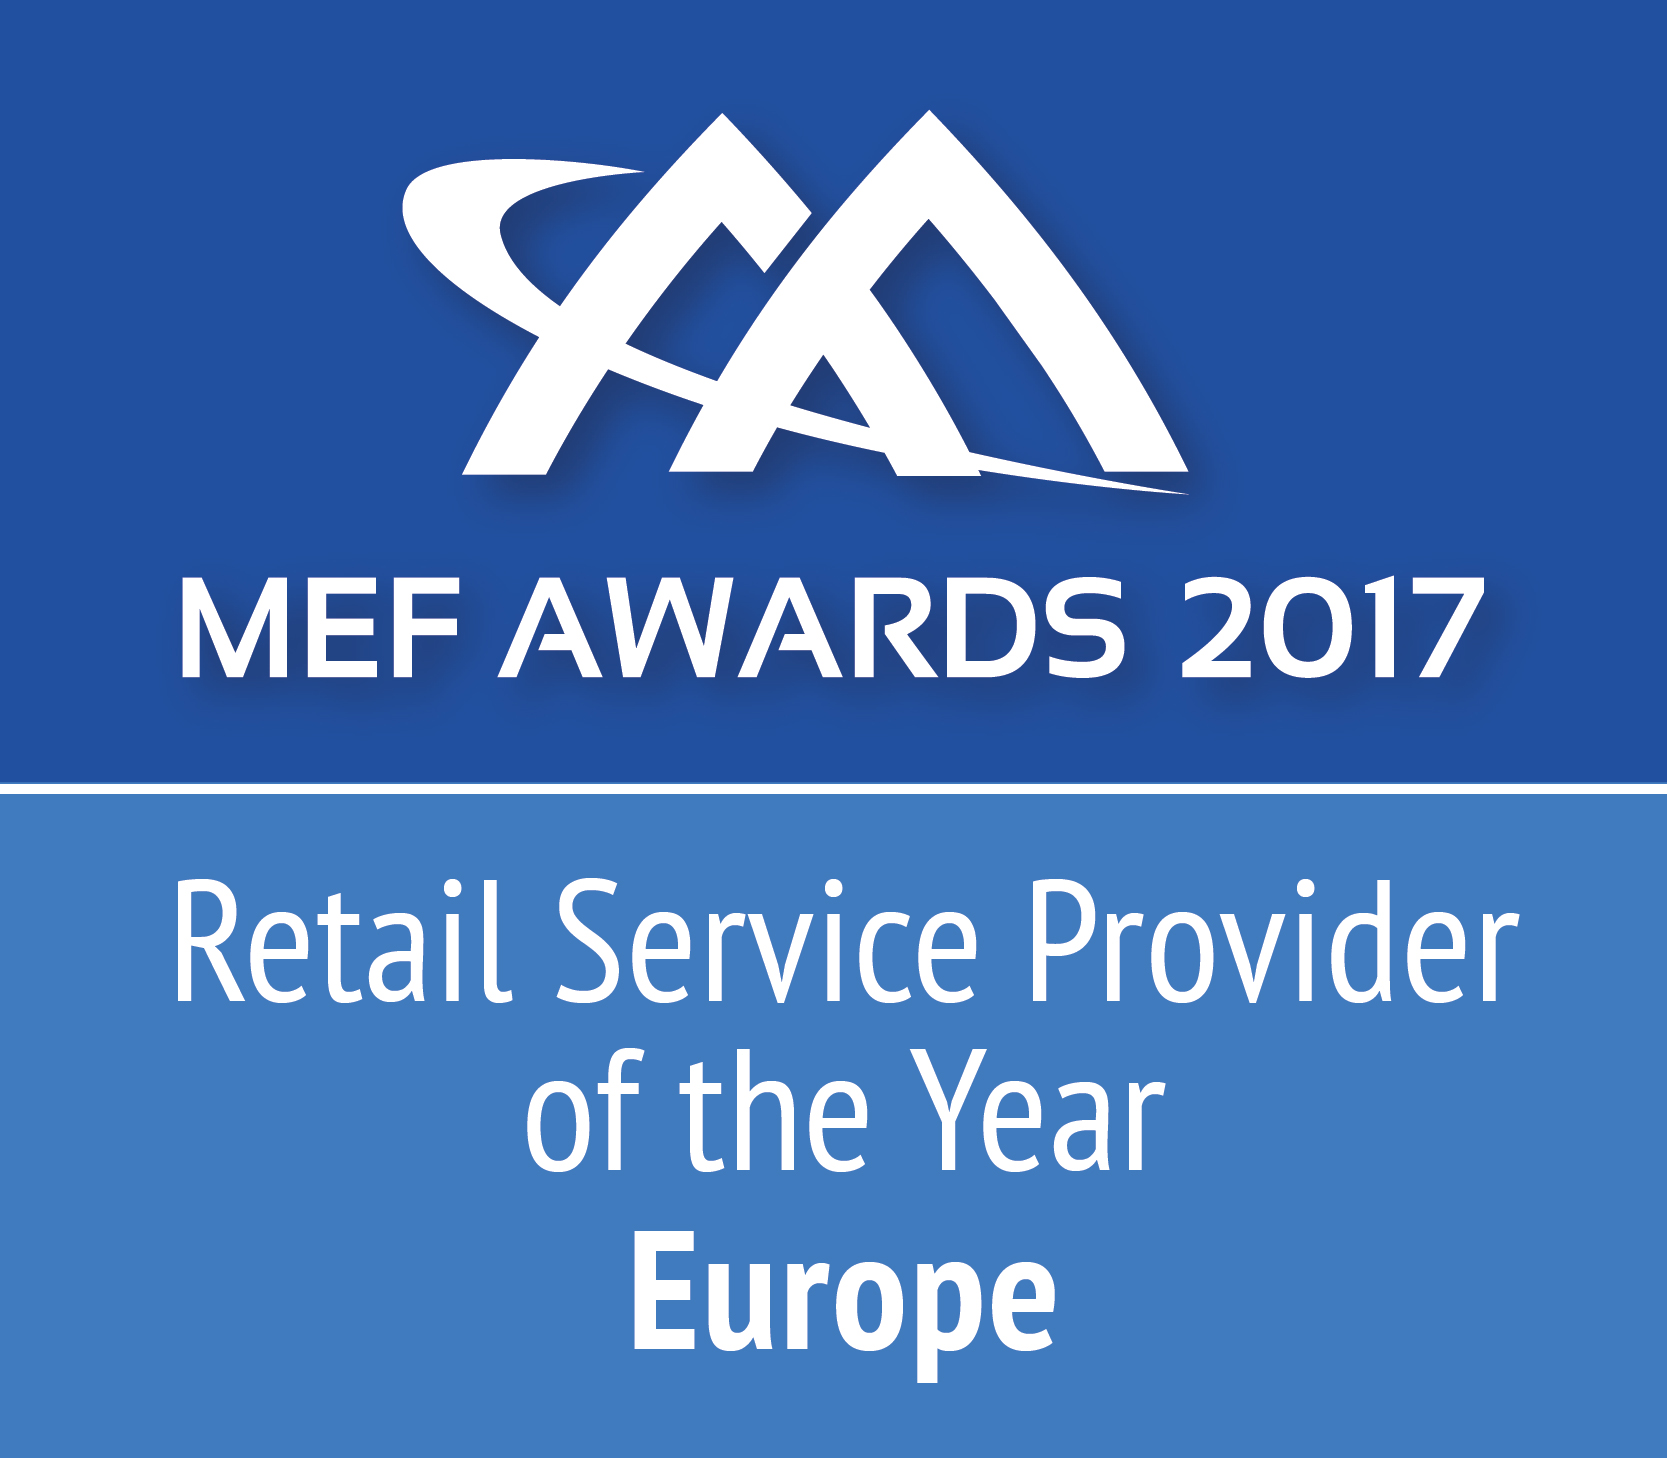 MEFAward2017_RetailProvider_Europe_r1